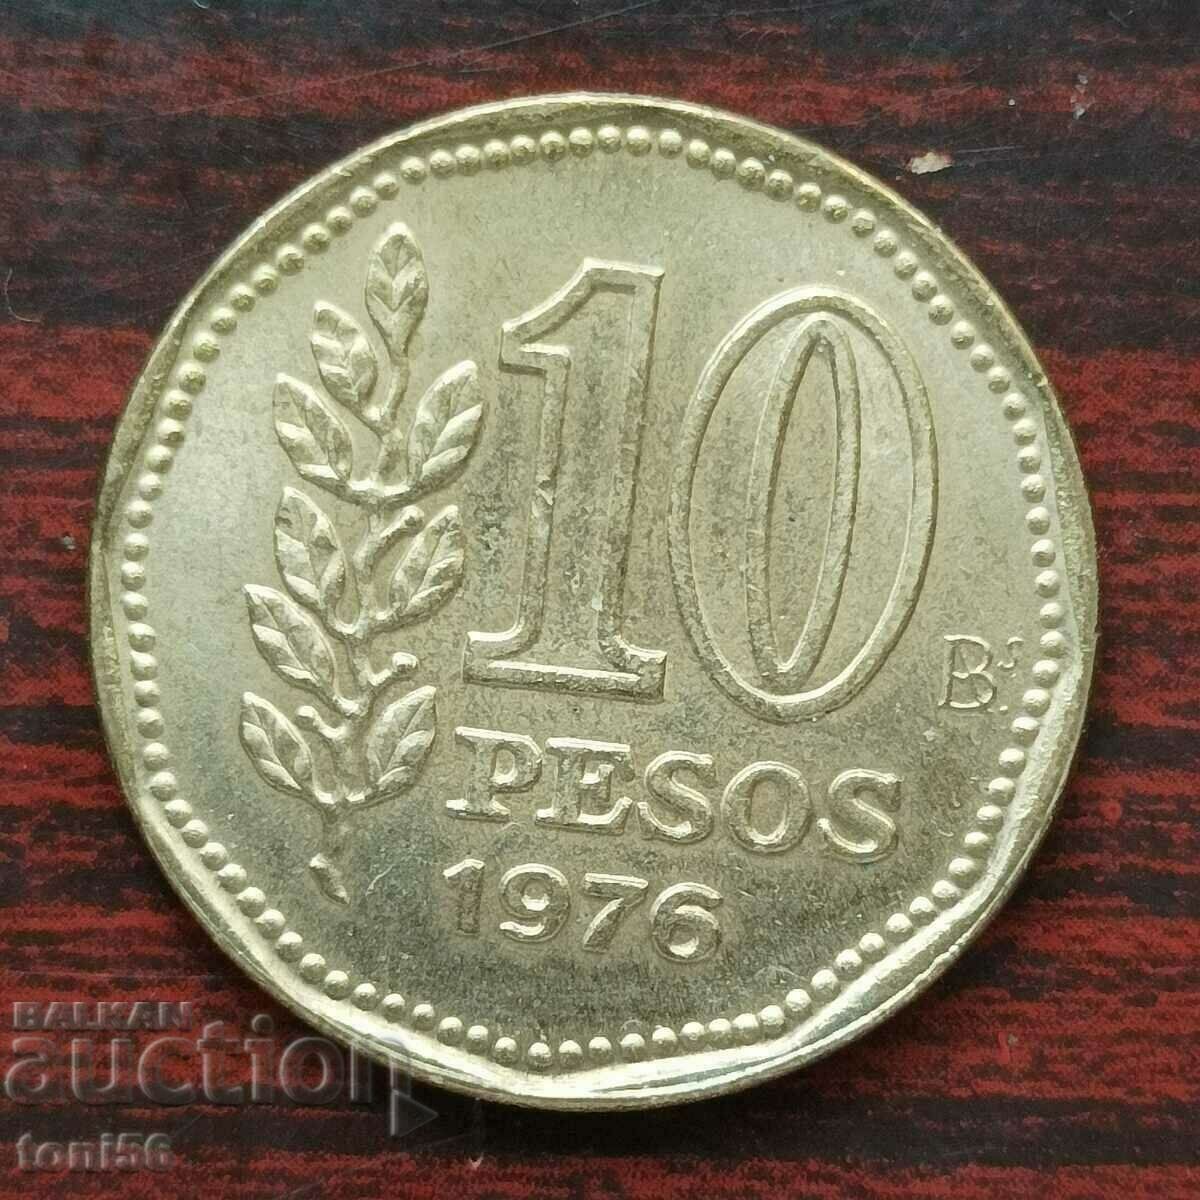 Аржентина 10 песос 1976 аUNC